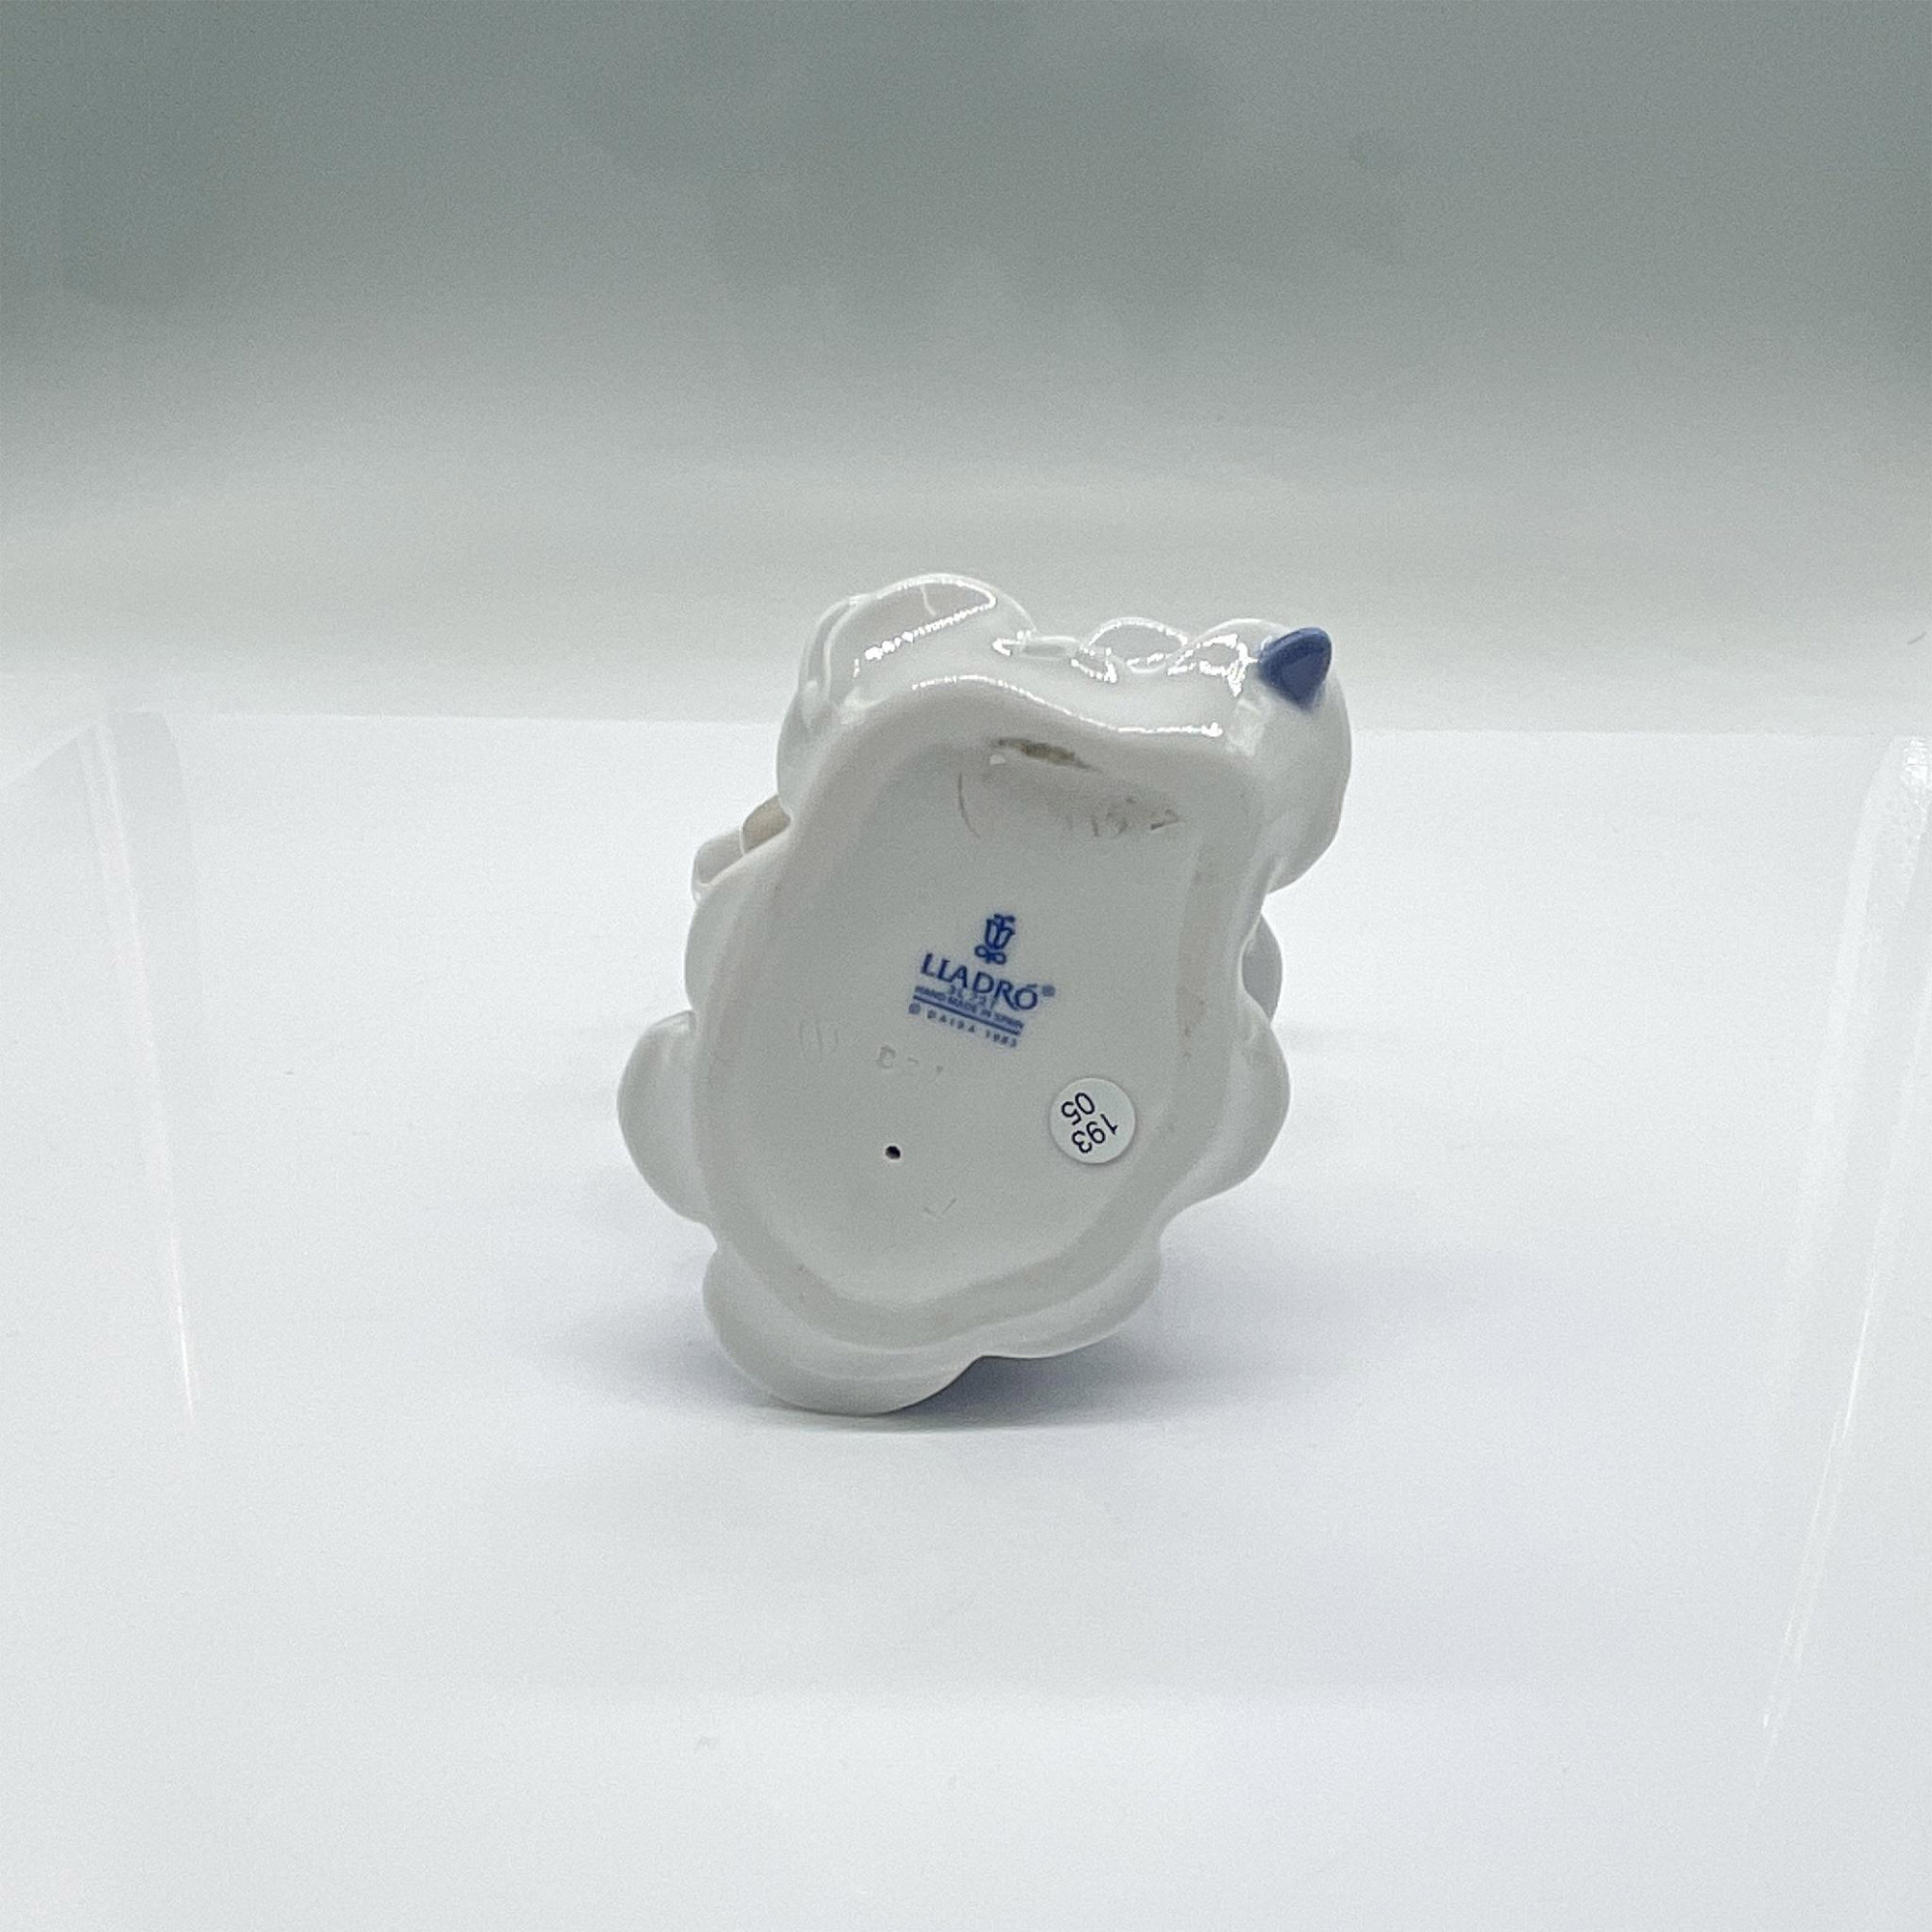 Juanita 1005193 - Lladro Porcelain Figurine - Image 3 of 4